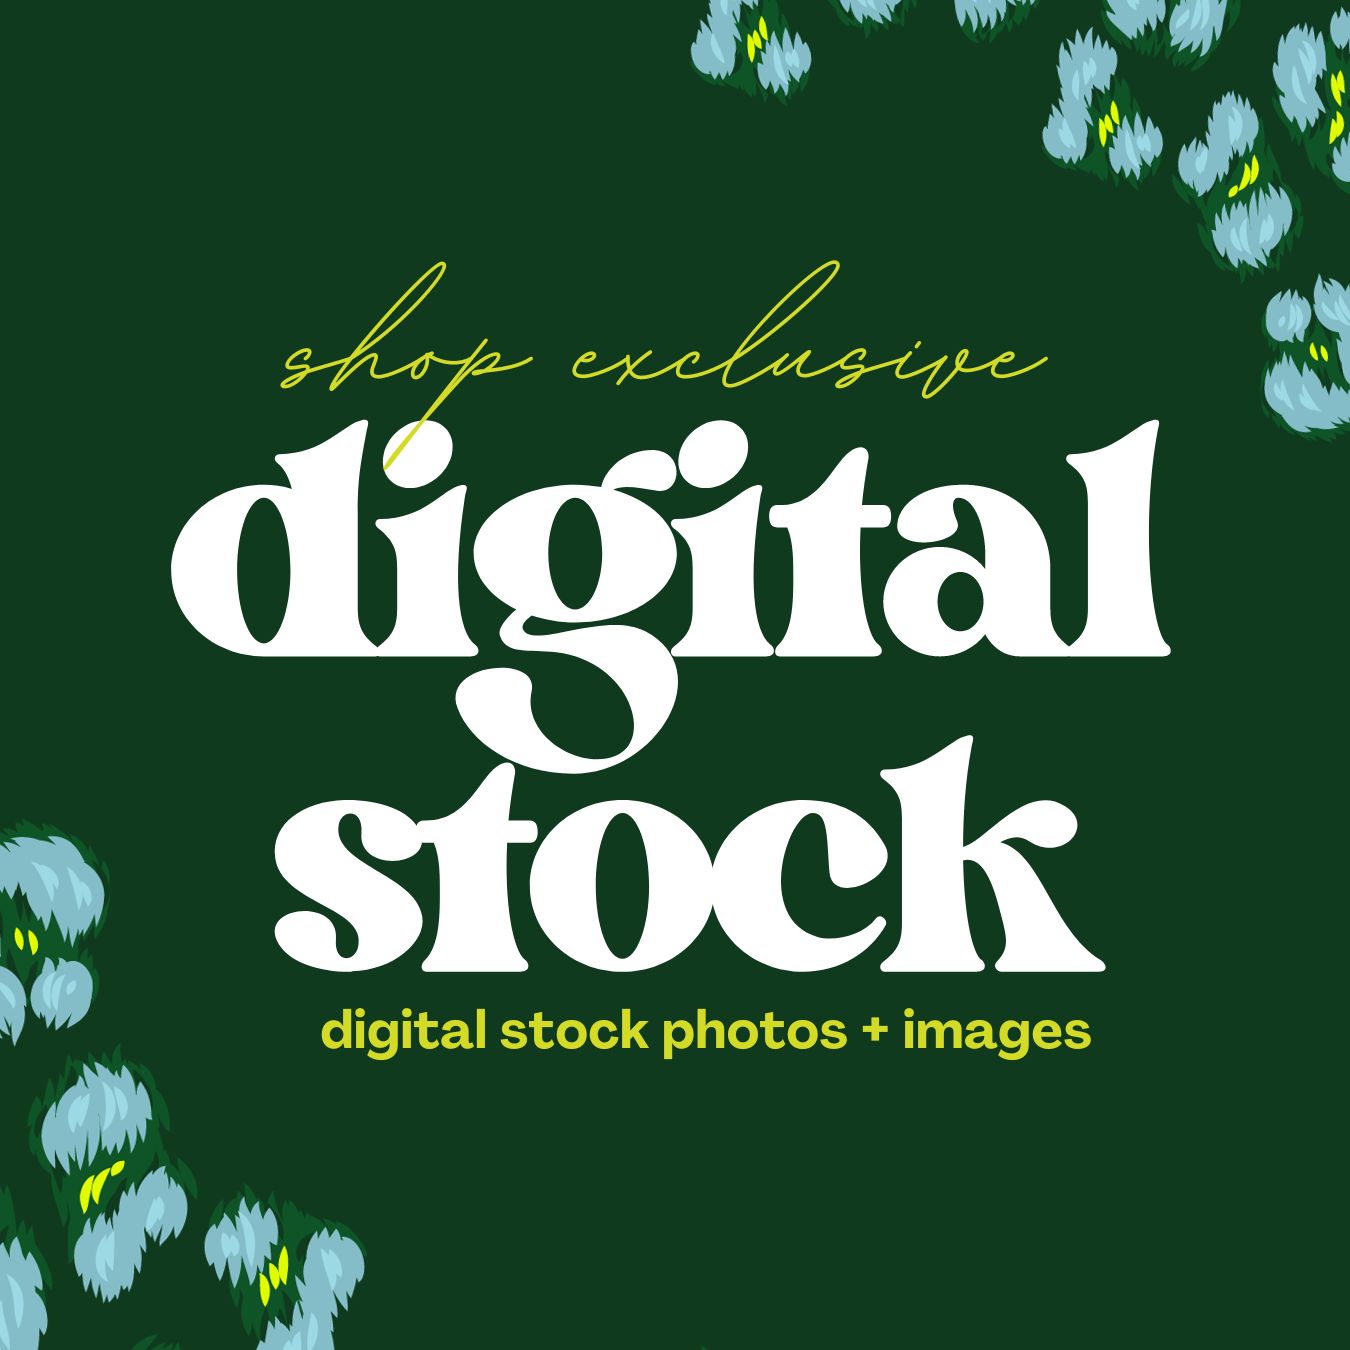 stock digital images/photos